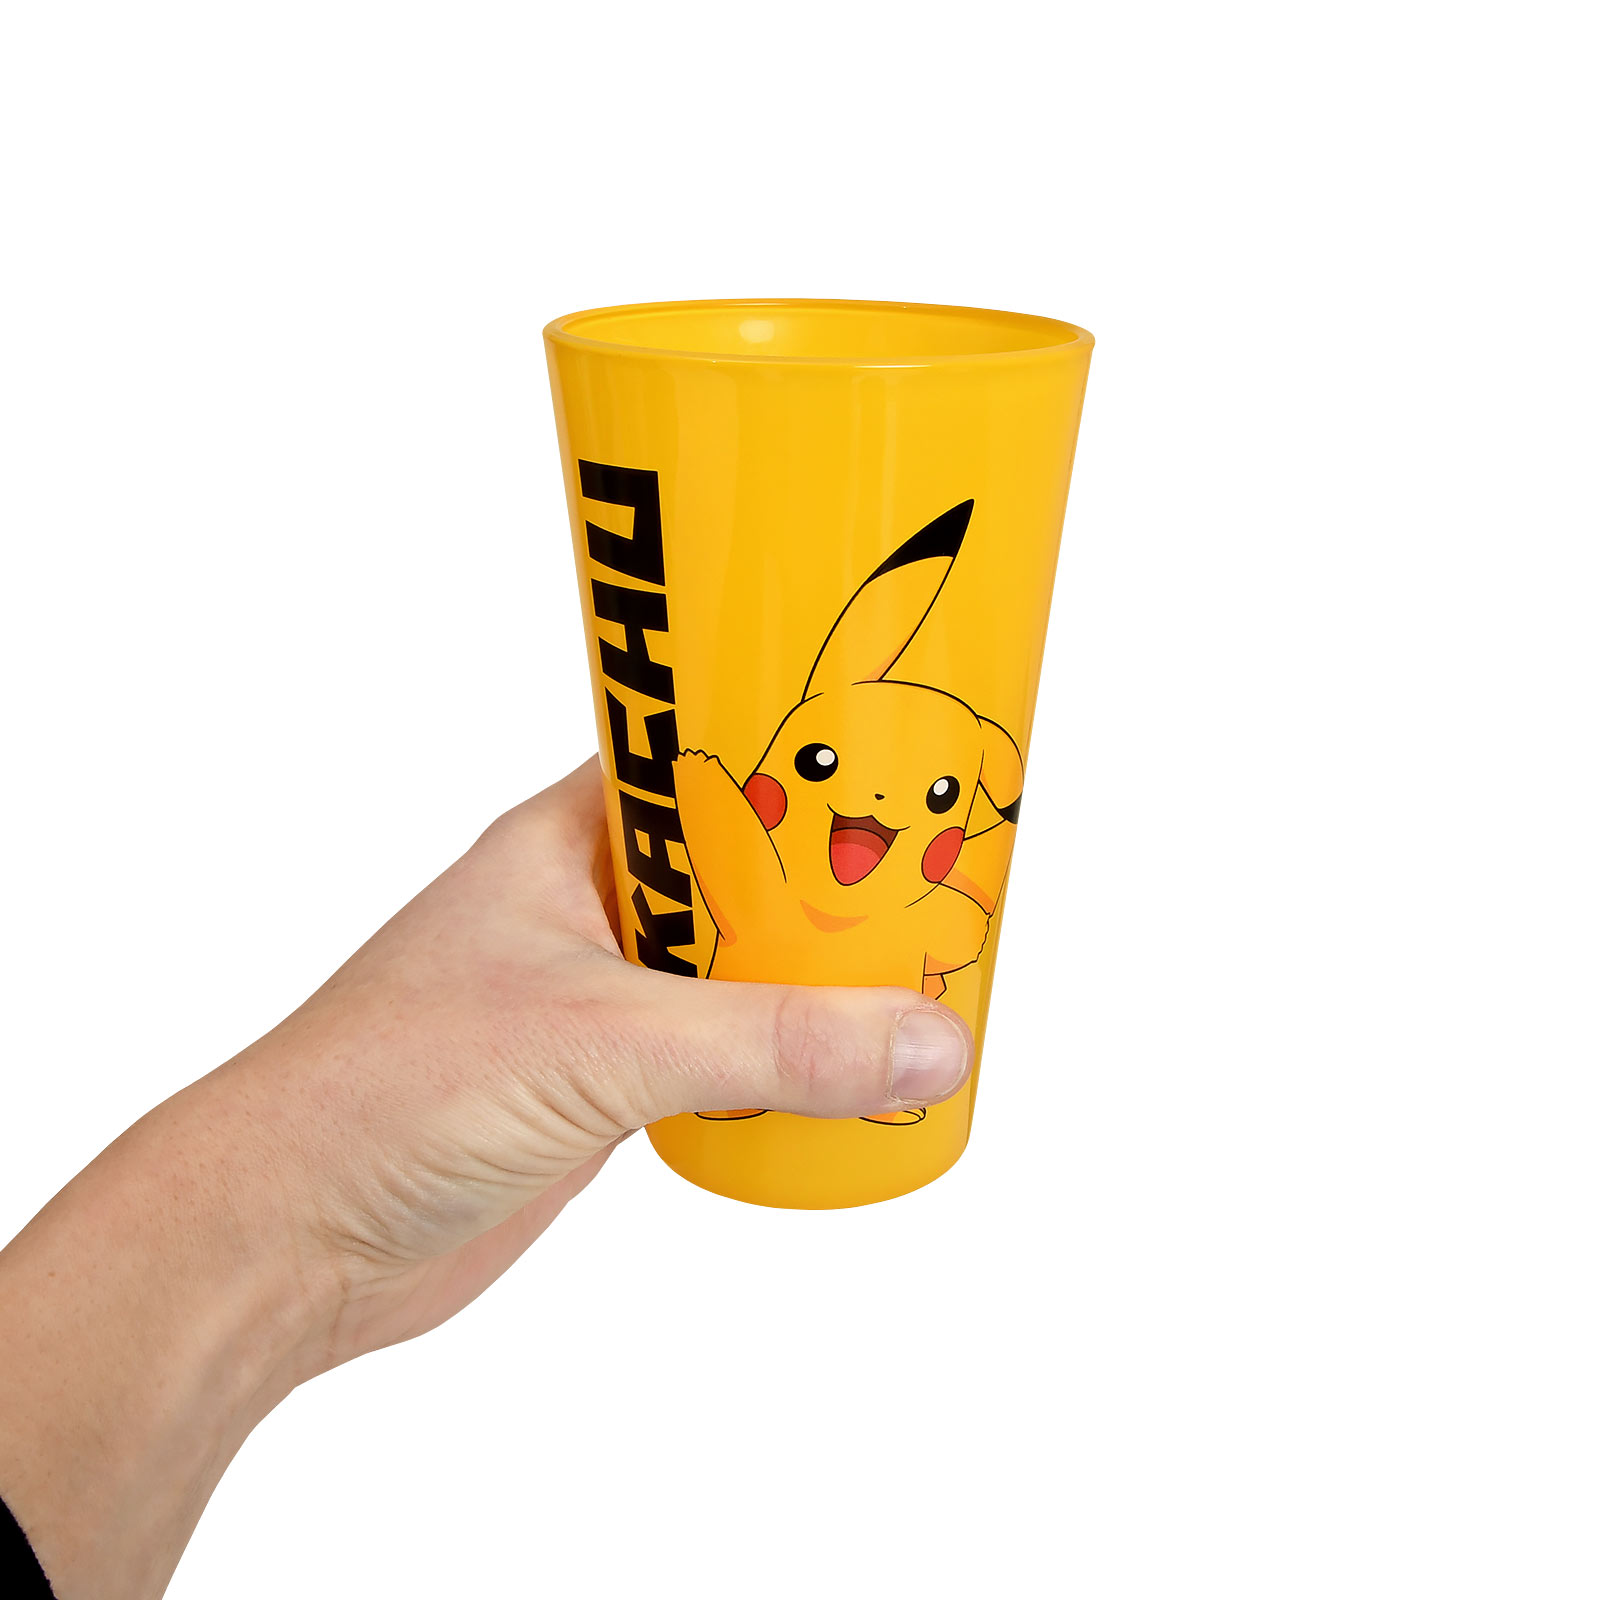 Pokemon - Pikachu Gift Set